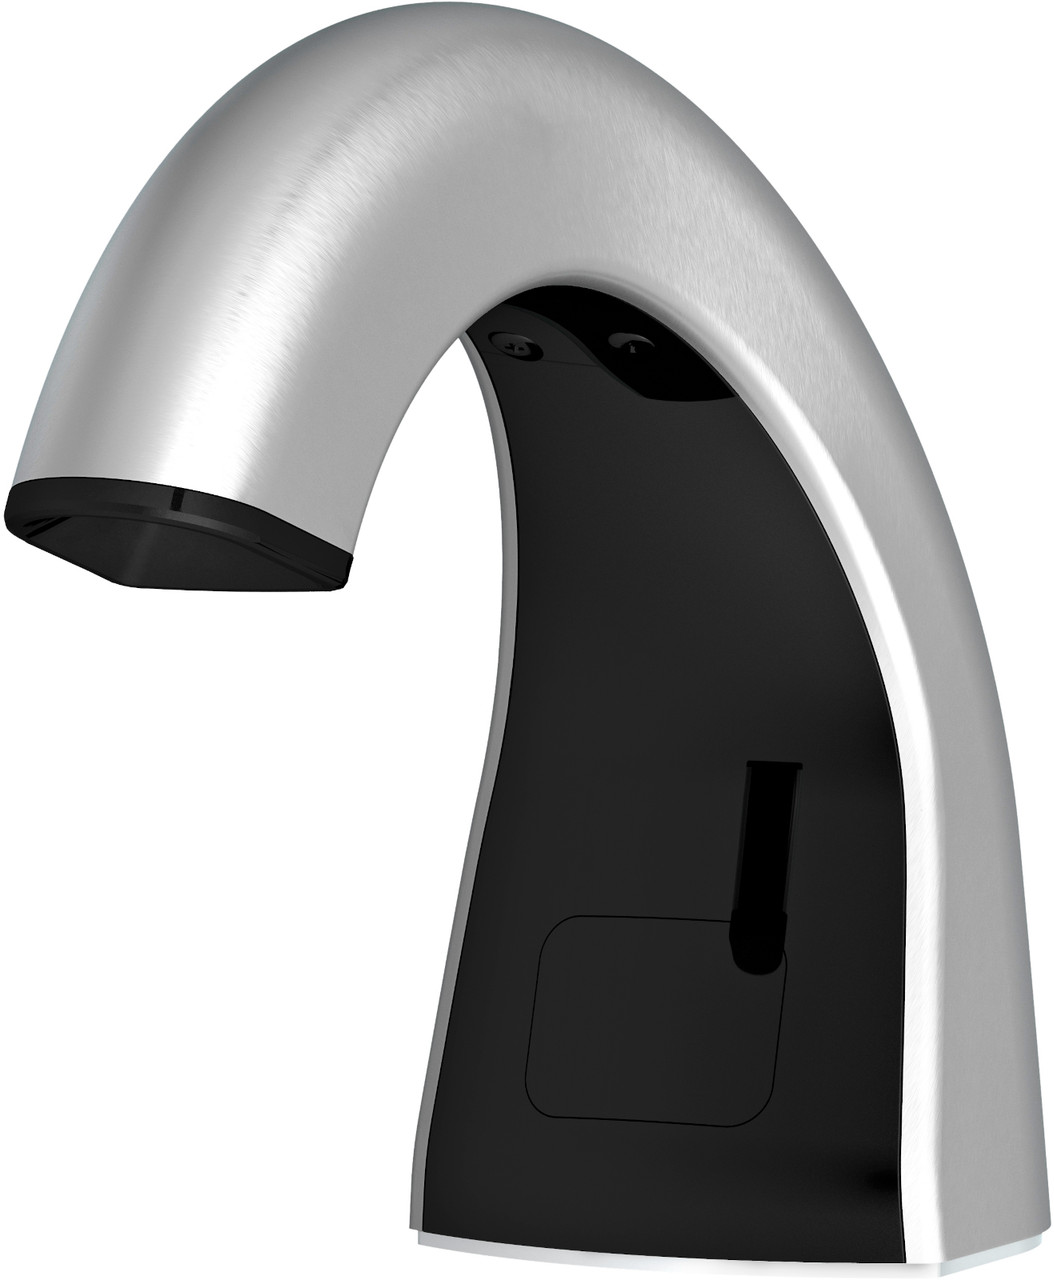 FG401310 - Rubbermaid OneShot Automatic Hand Lotion Dispenser - Chrome